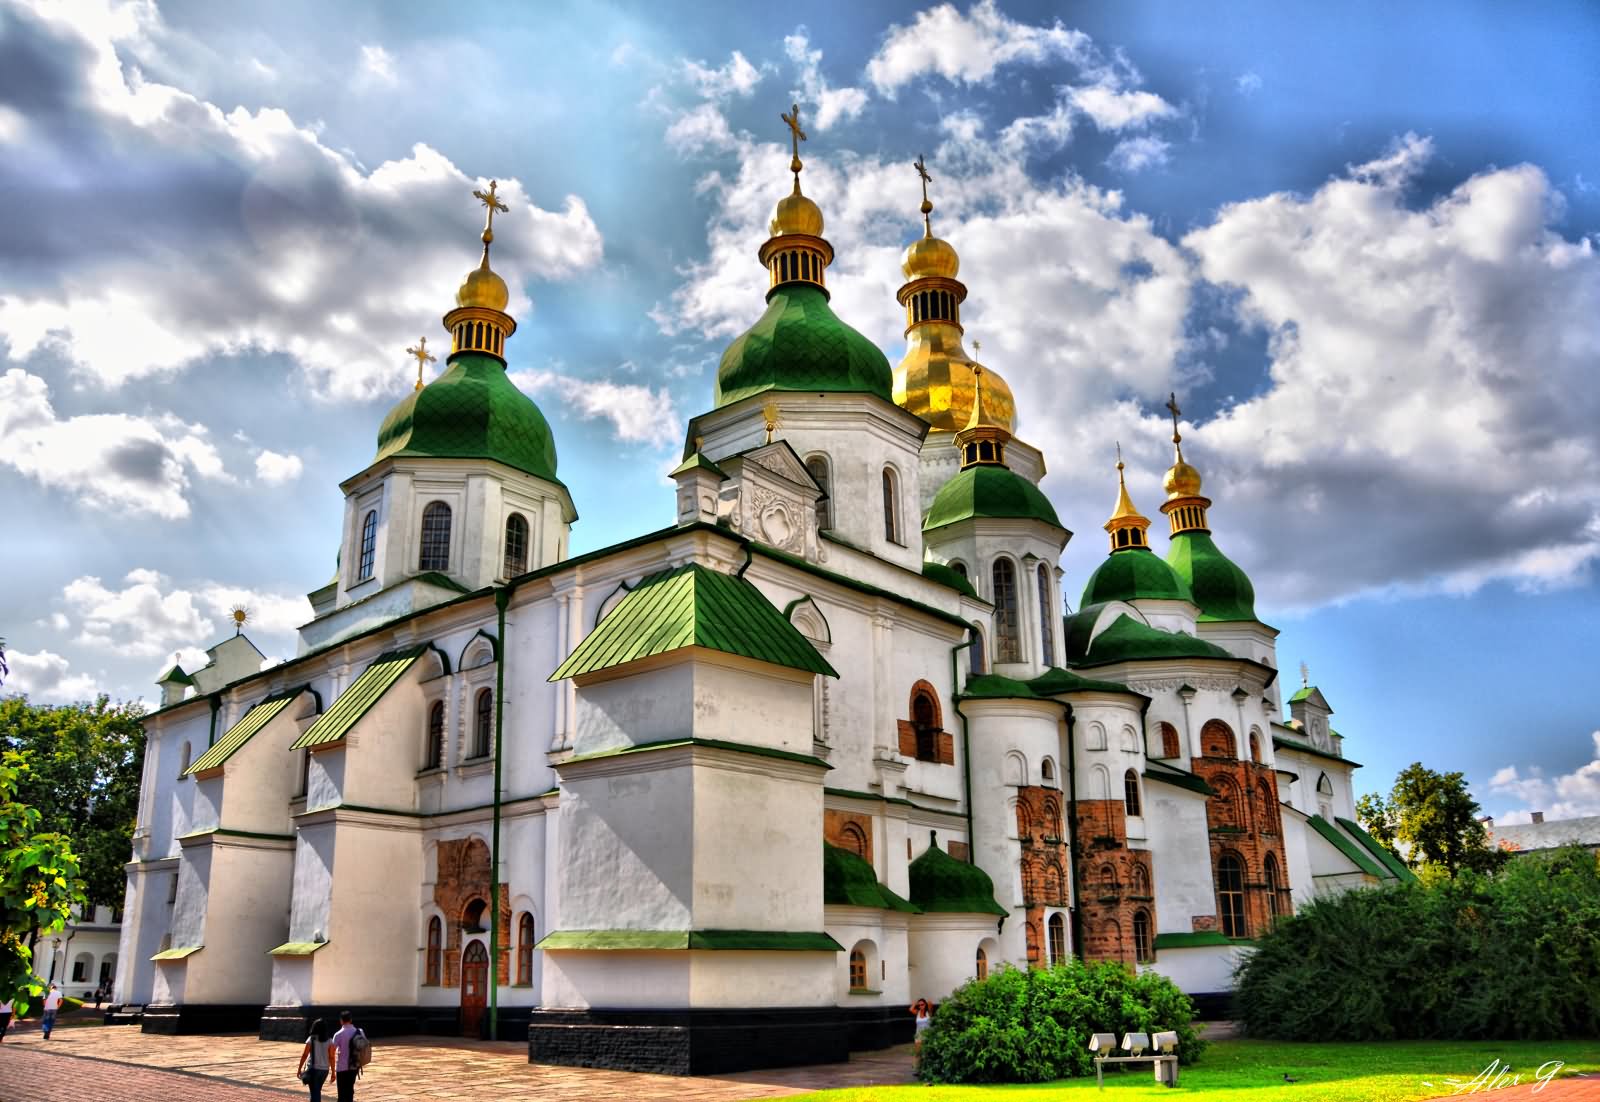 Back View Of The Saint Sophia Cathedral In Kiev